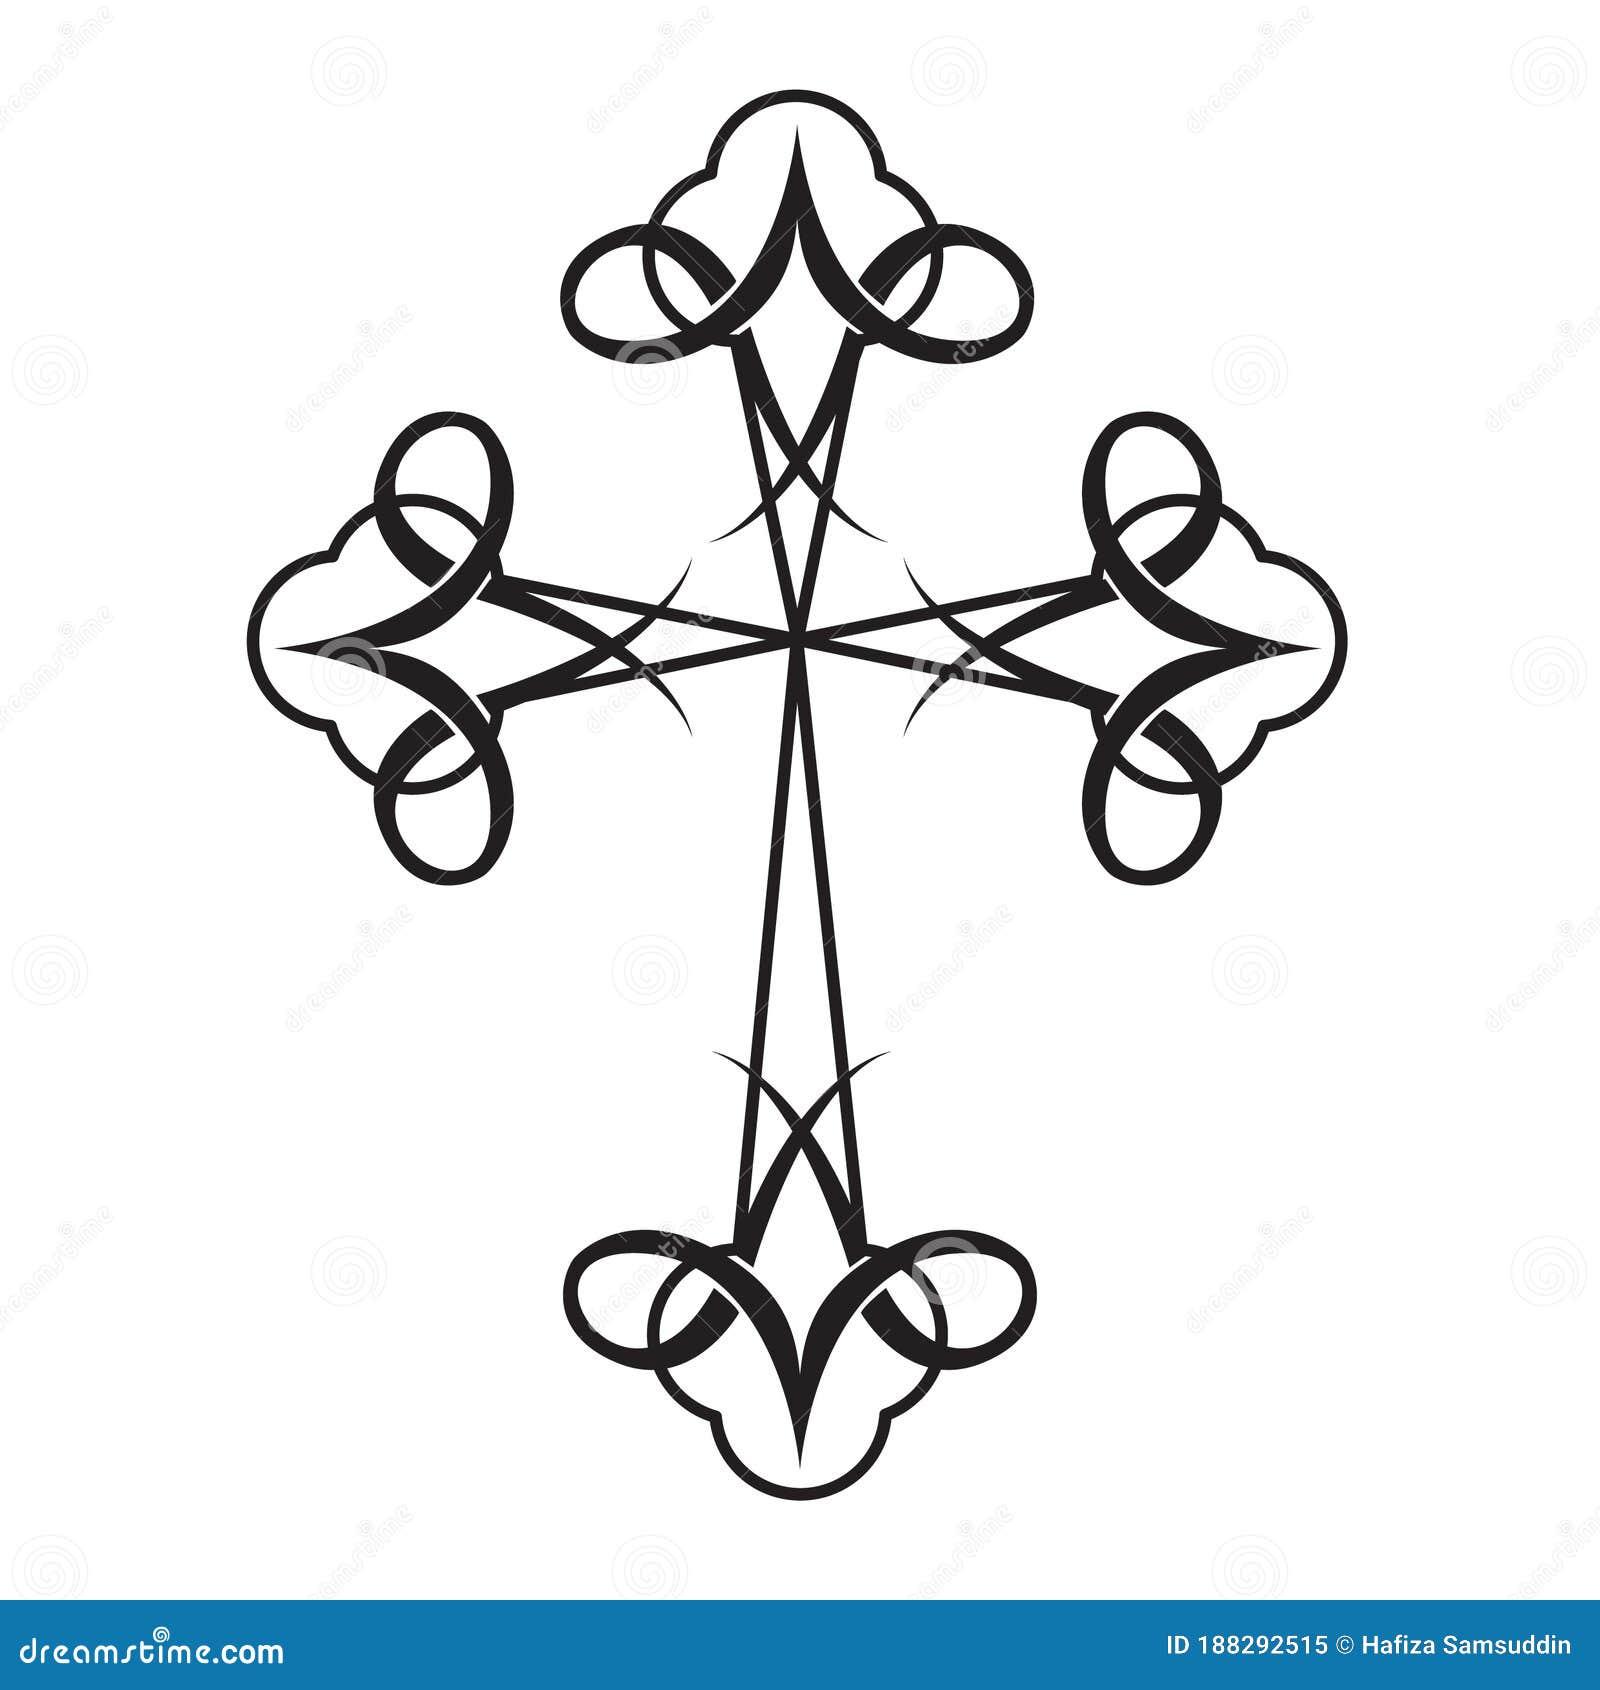 Tribal Cross Tattoo. Vector Illustration Decorative Design Stock Vector - Illustration of ornate, symbols: 188292515